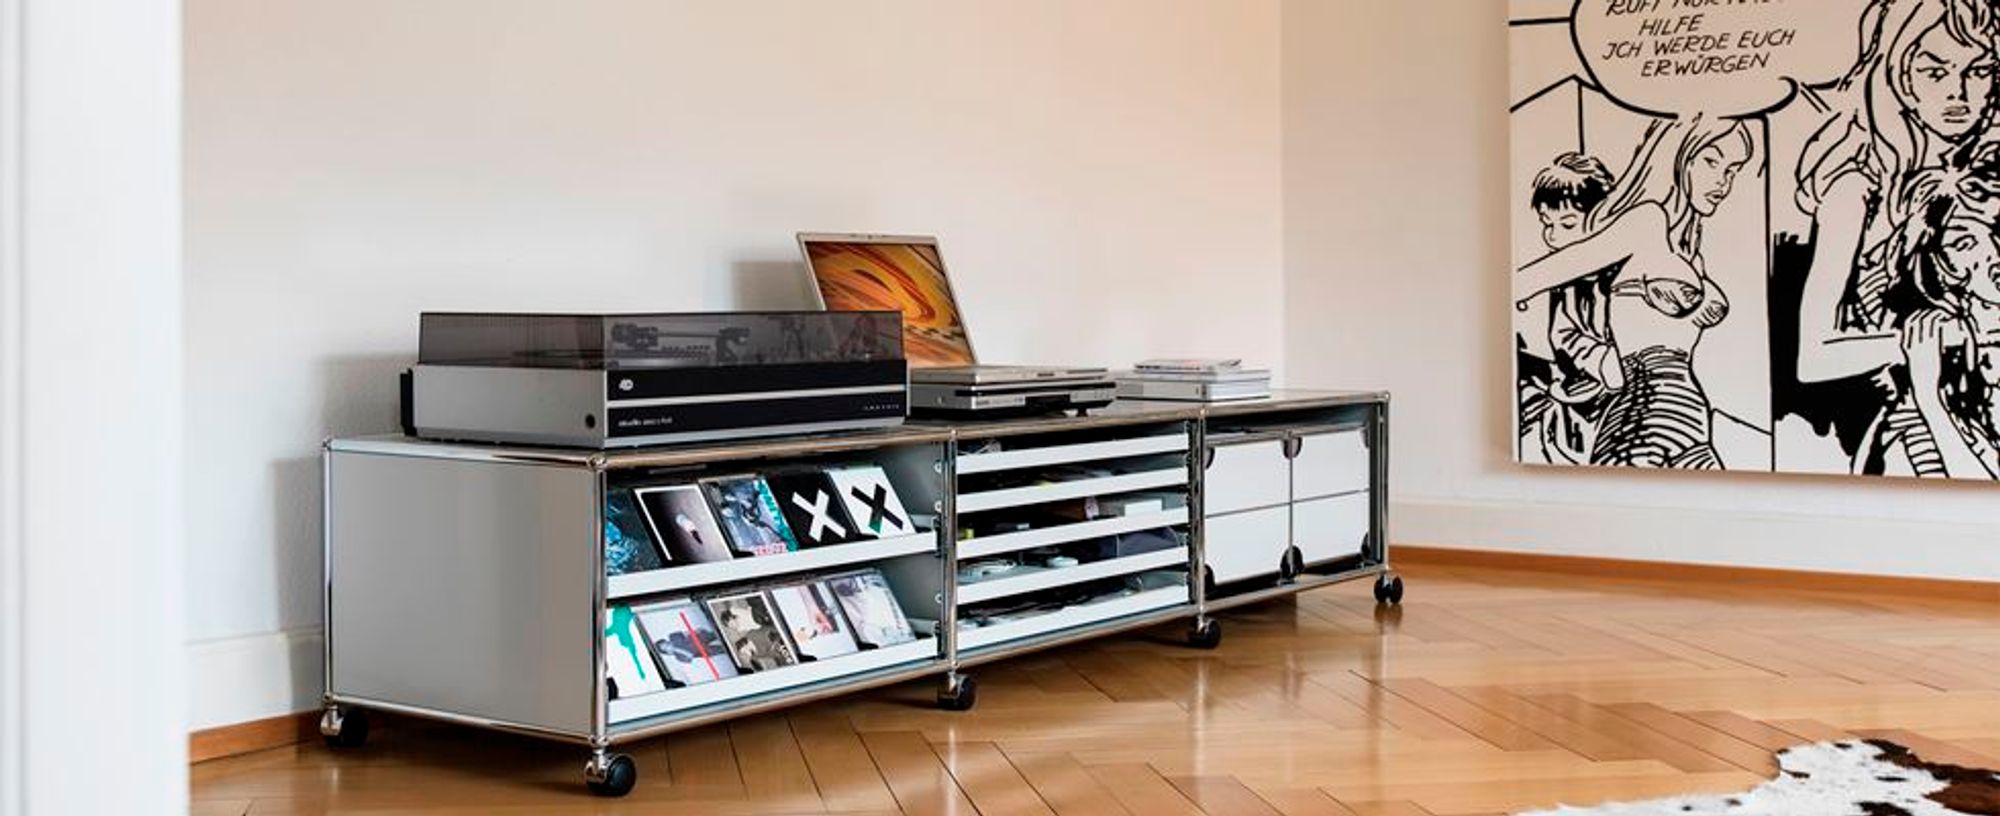 A vinyl collection on USM cabinet. Image courtesy: USM Switzerland